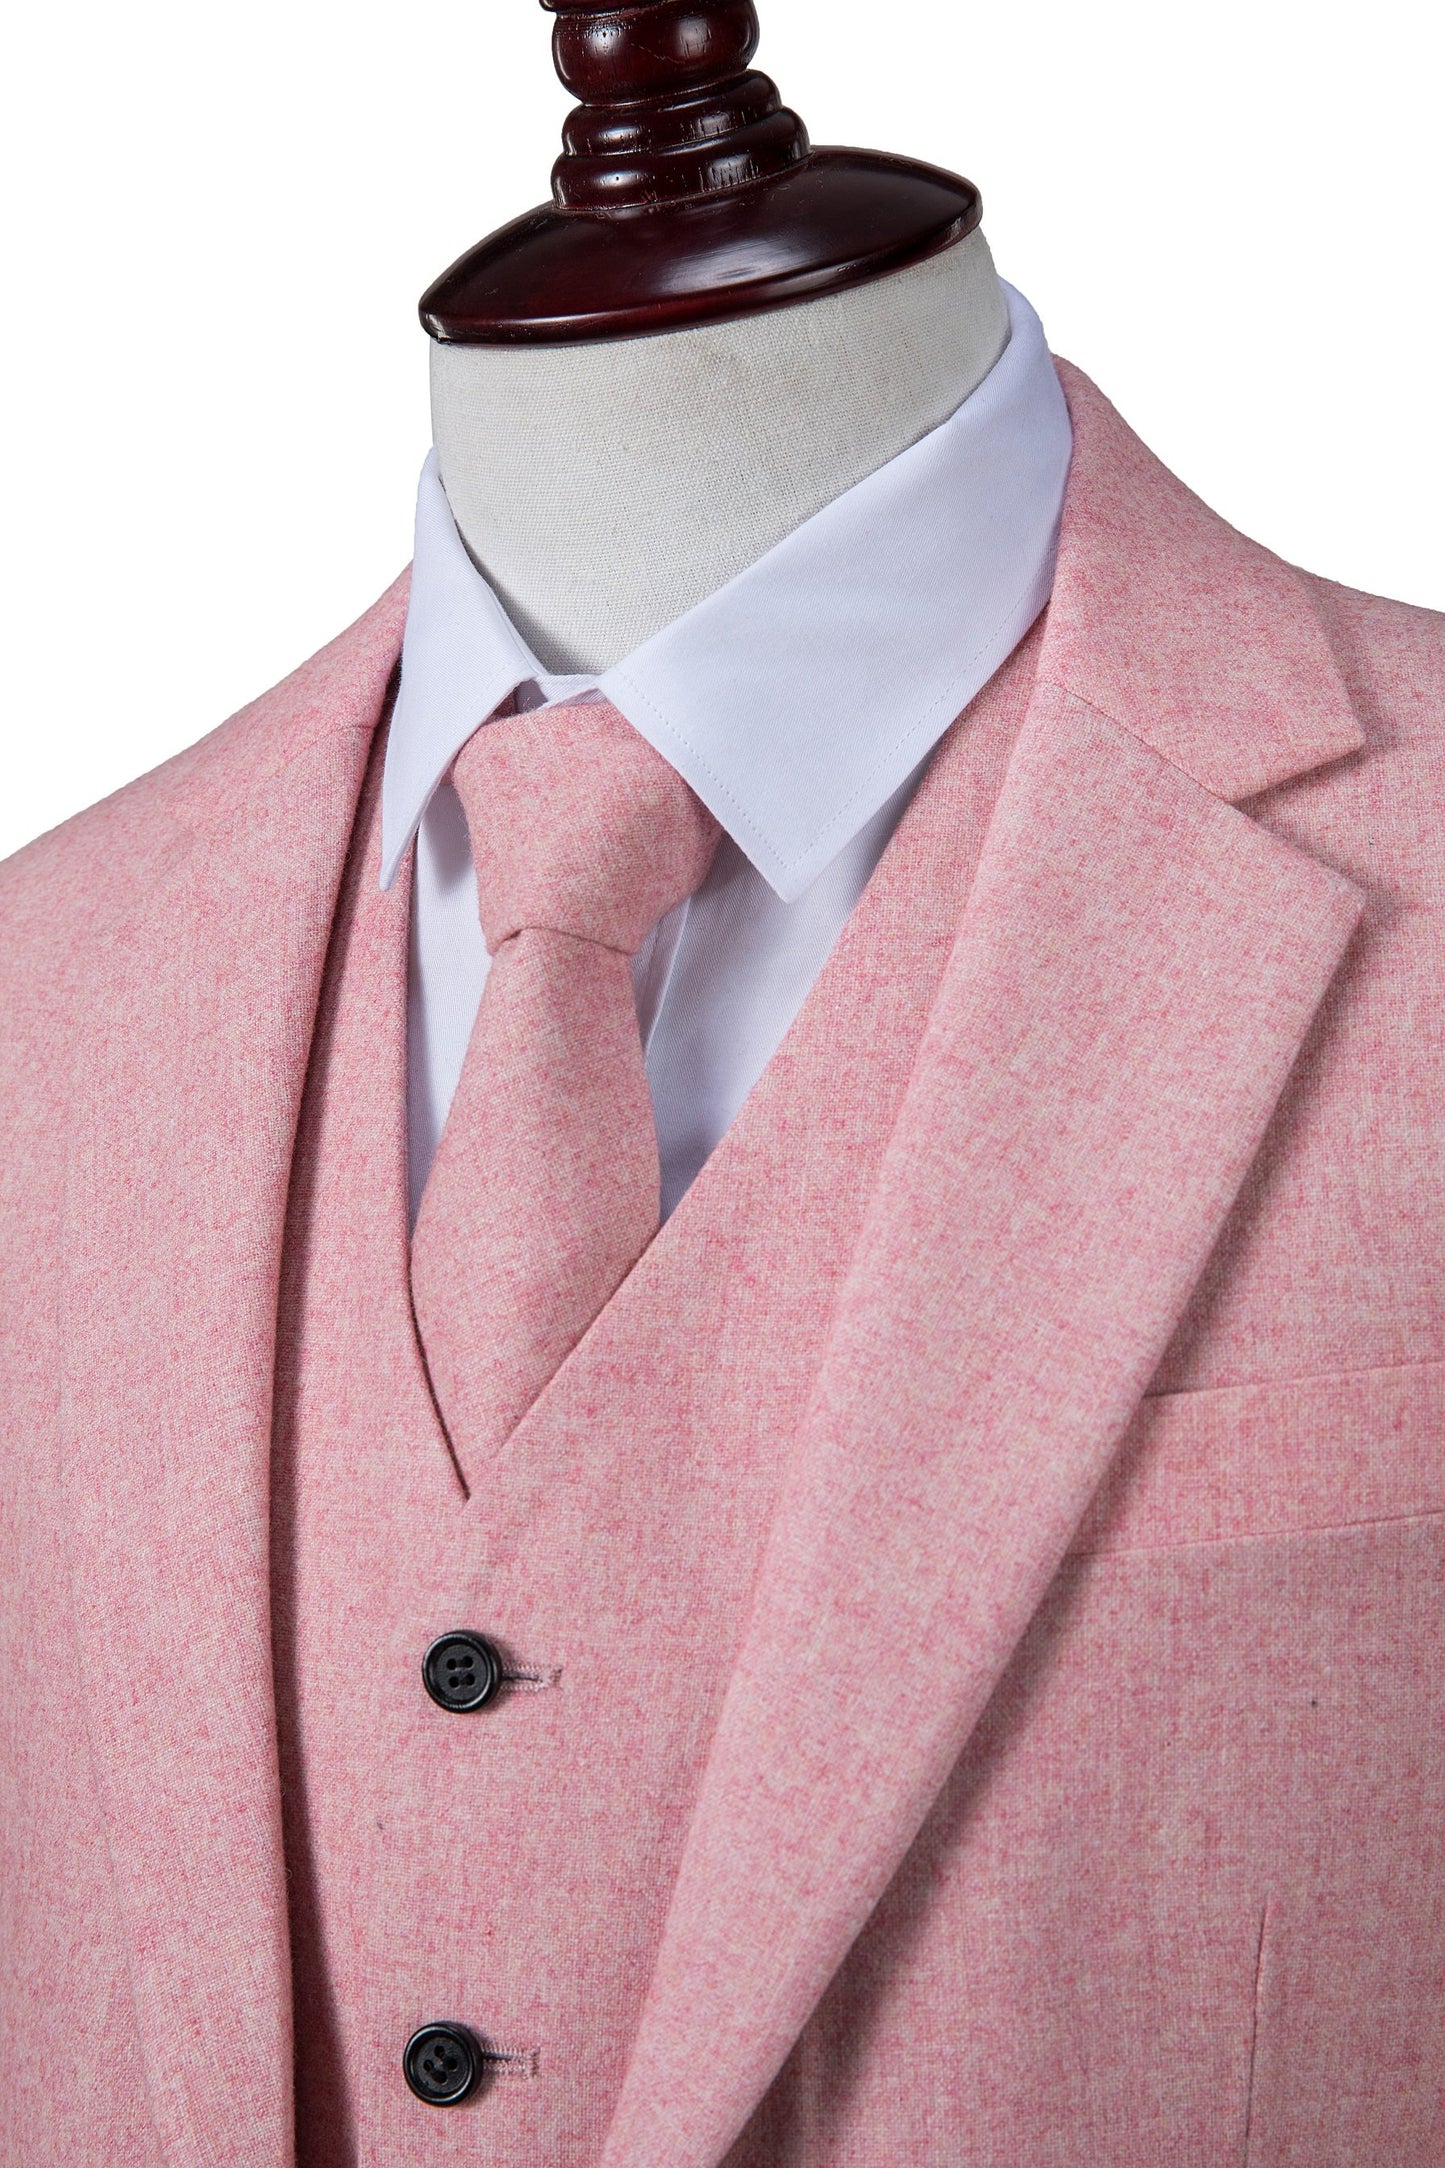 Pink Twill Tweed Suit